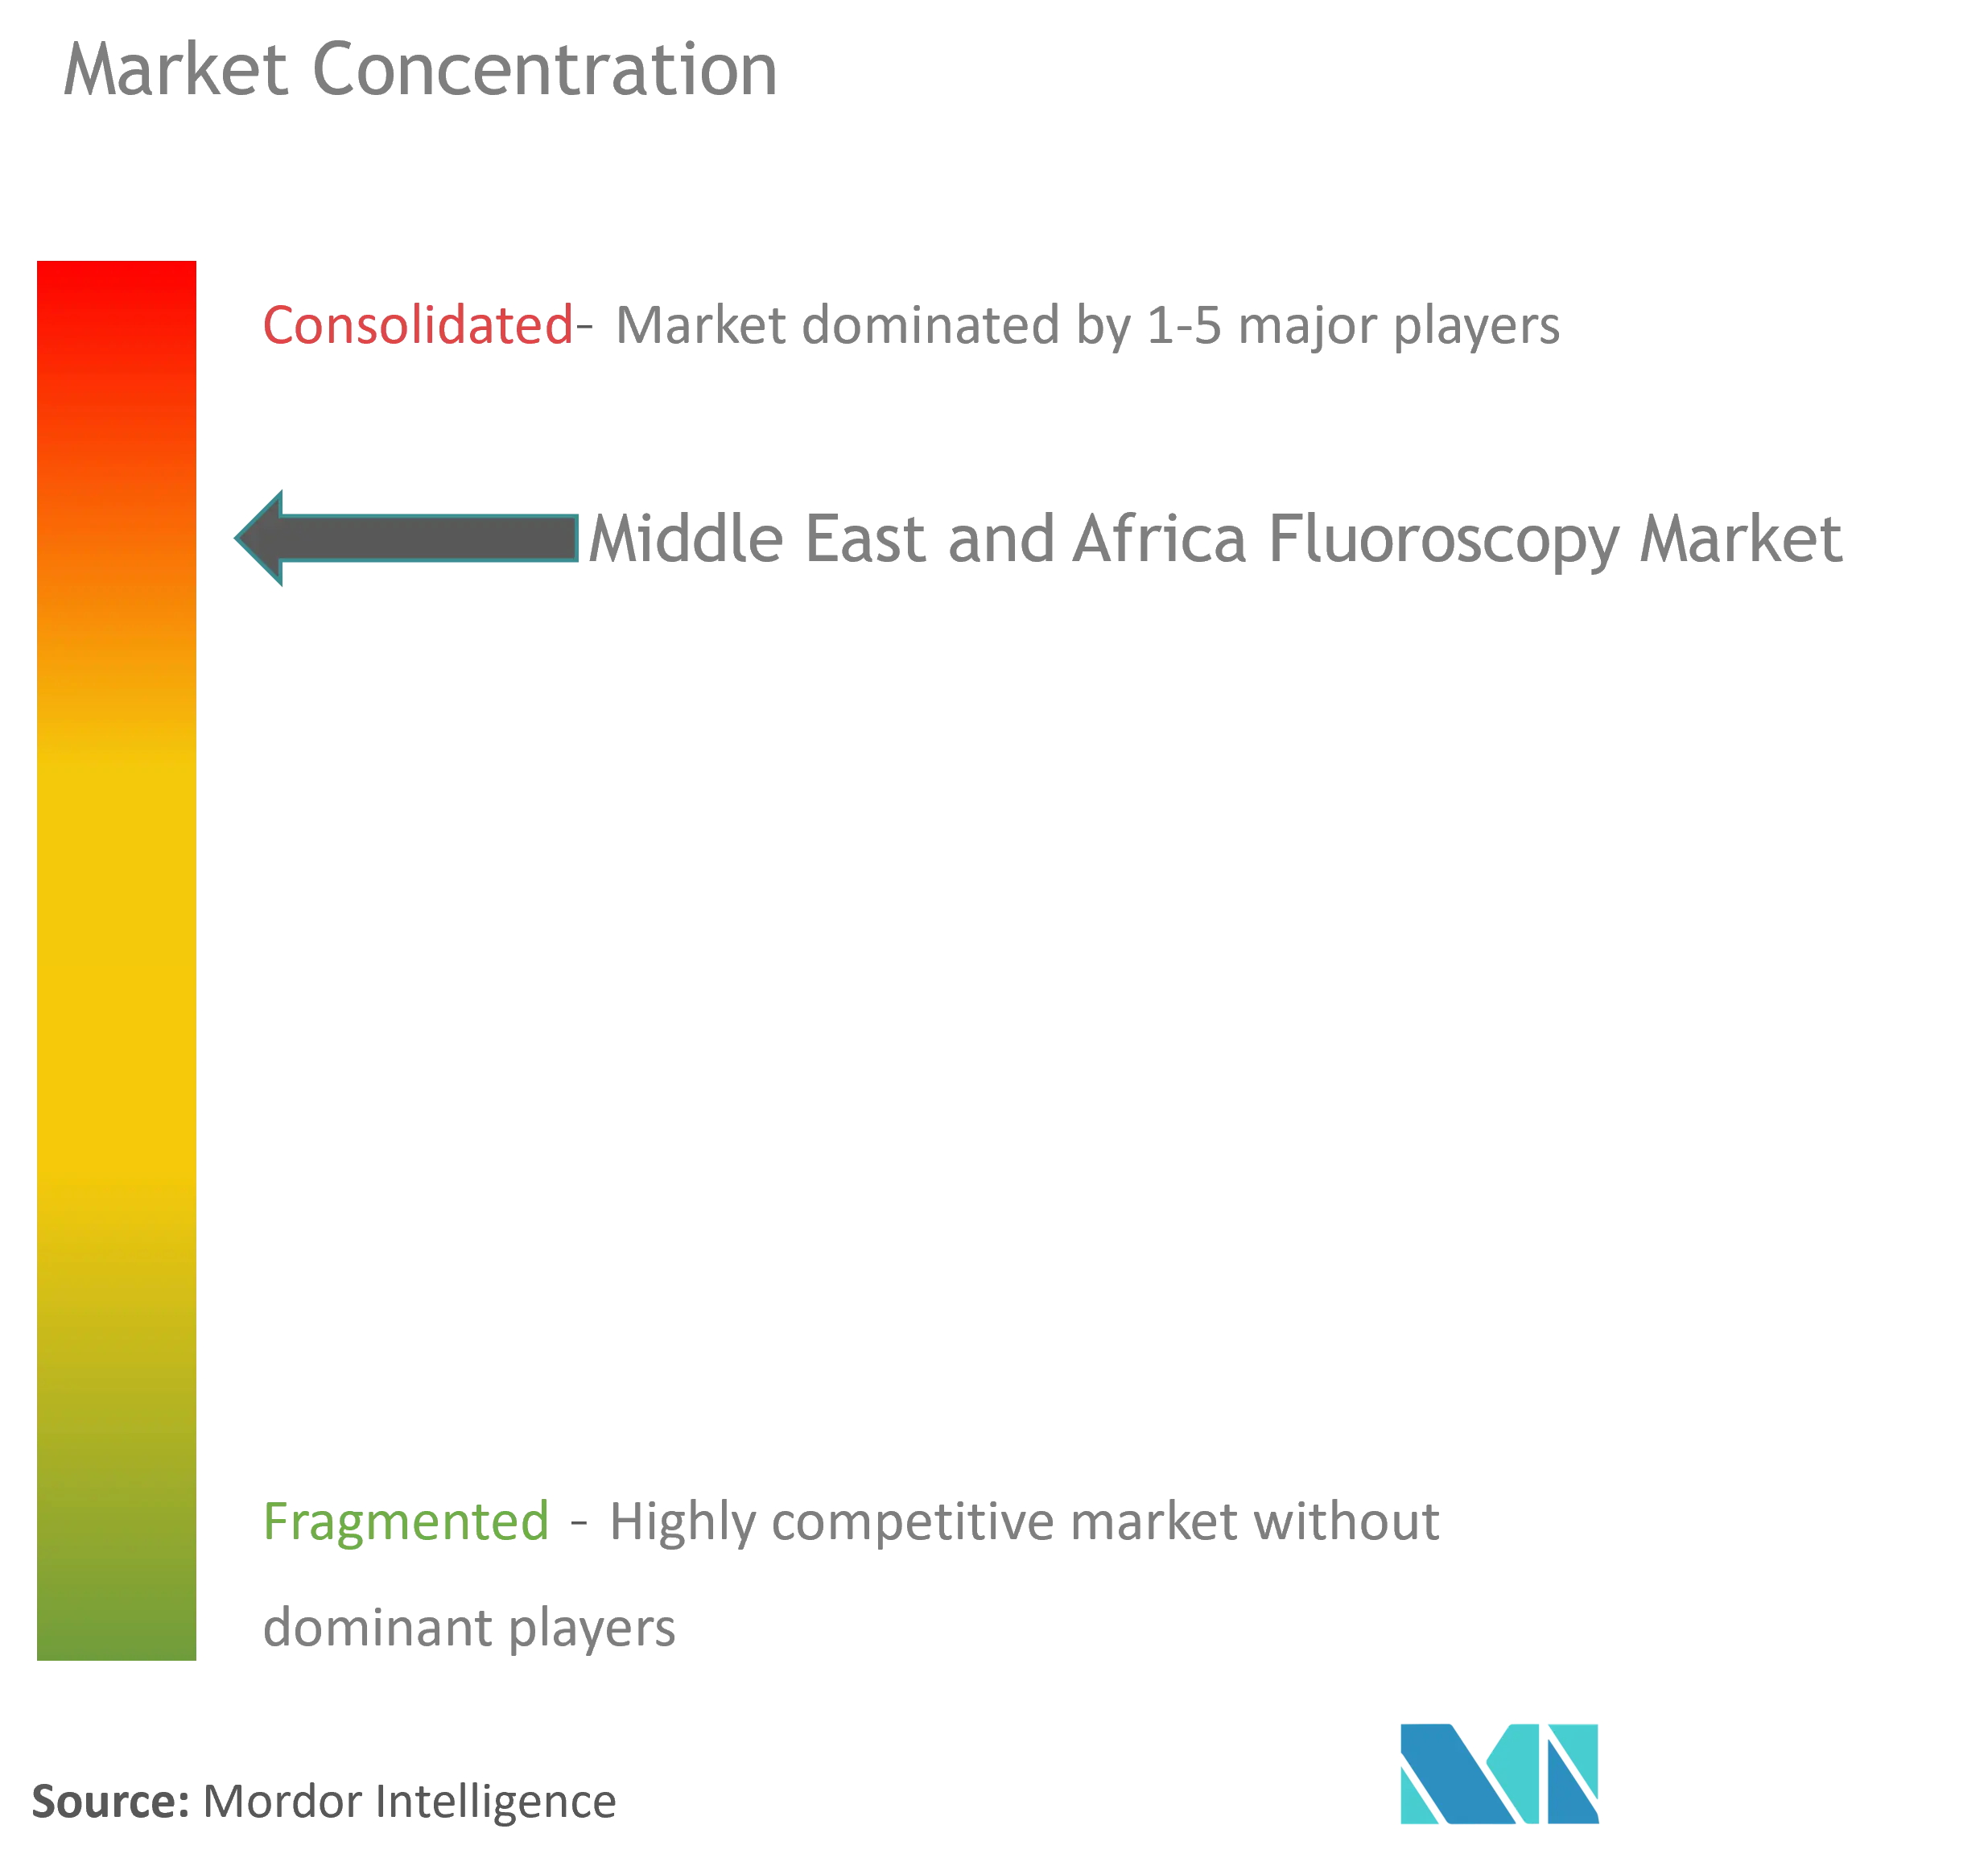 MEA Fluoroscopy Market Concentration